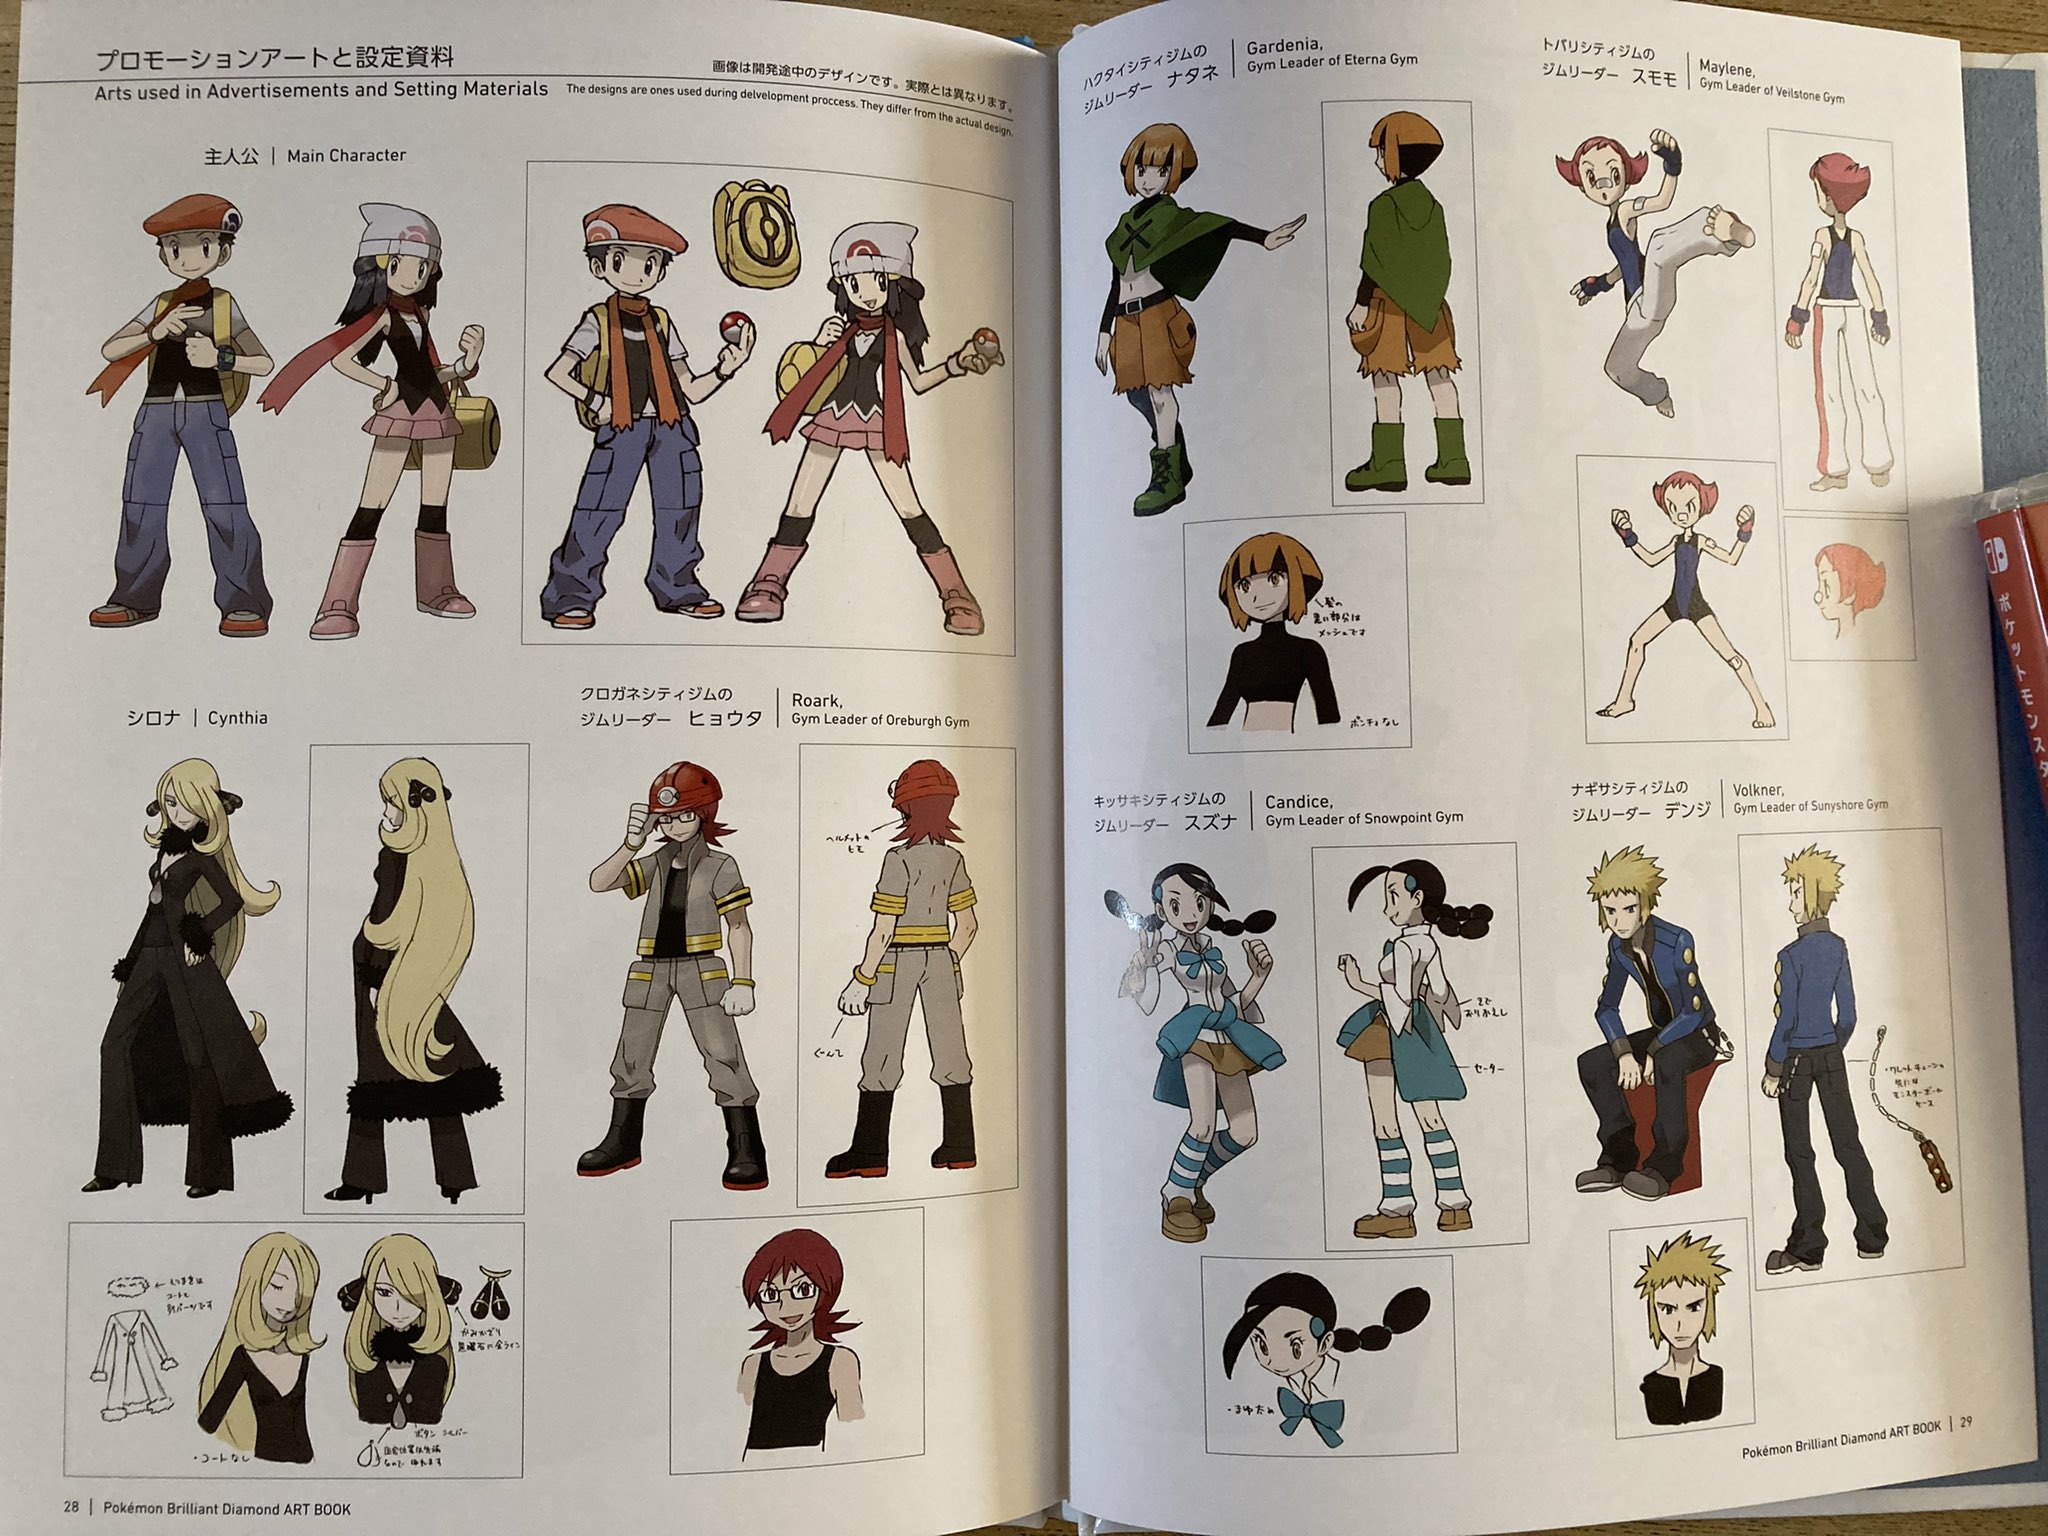 🇦🇷 Aleph ℵ 🏳️‍🌈 on X: The Pokémon BDSP artbooks feature